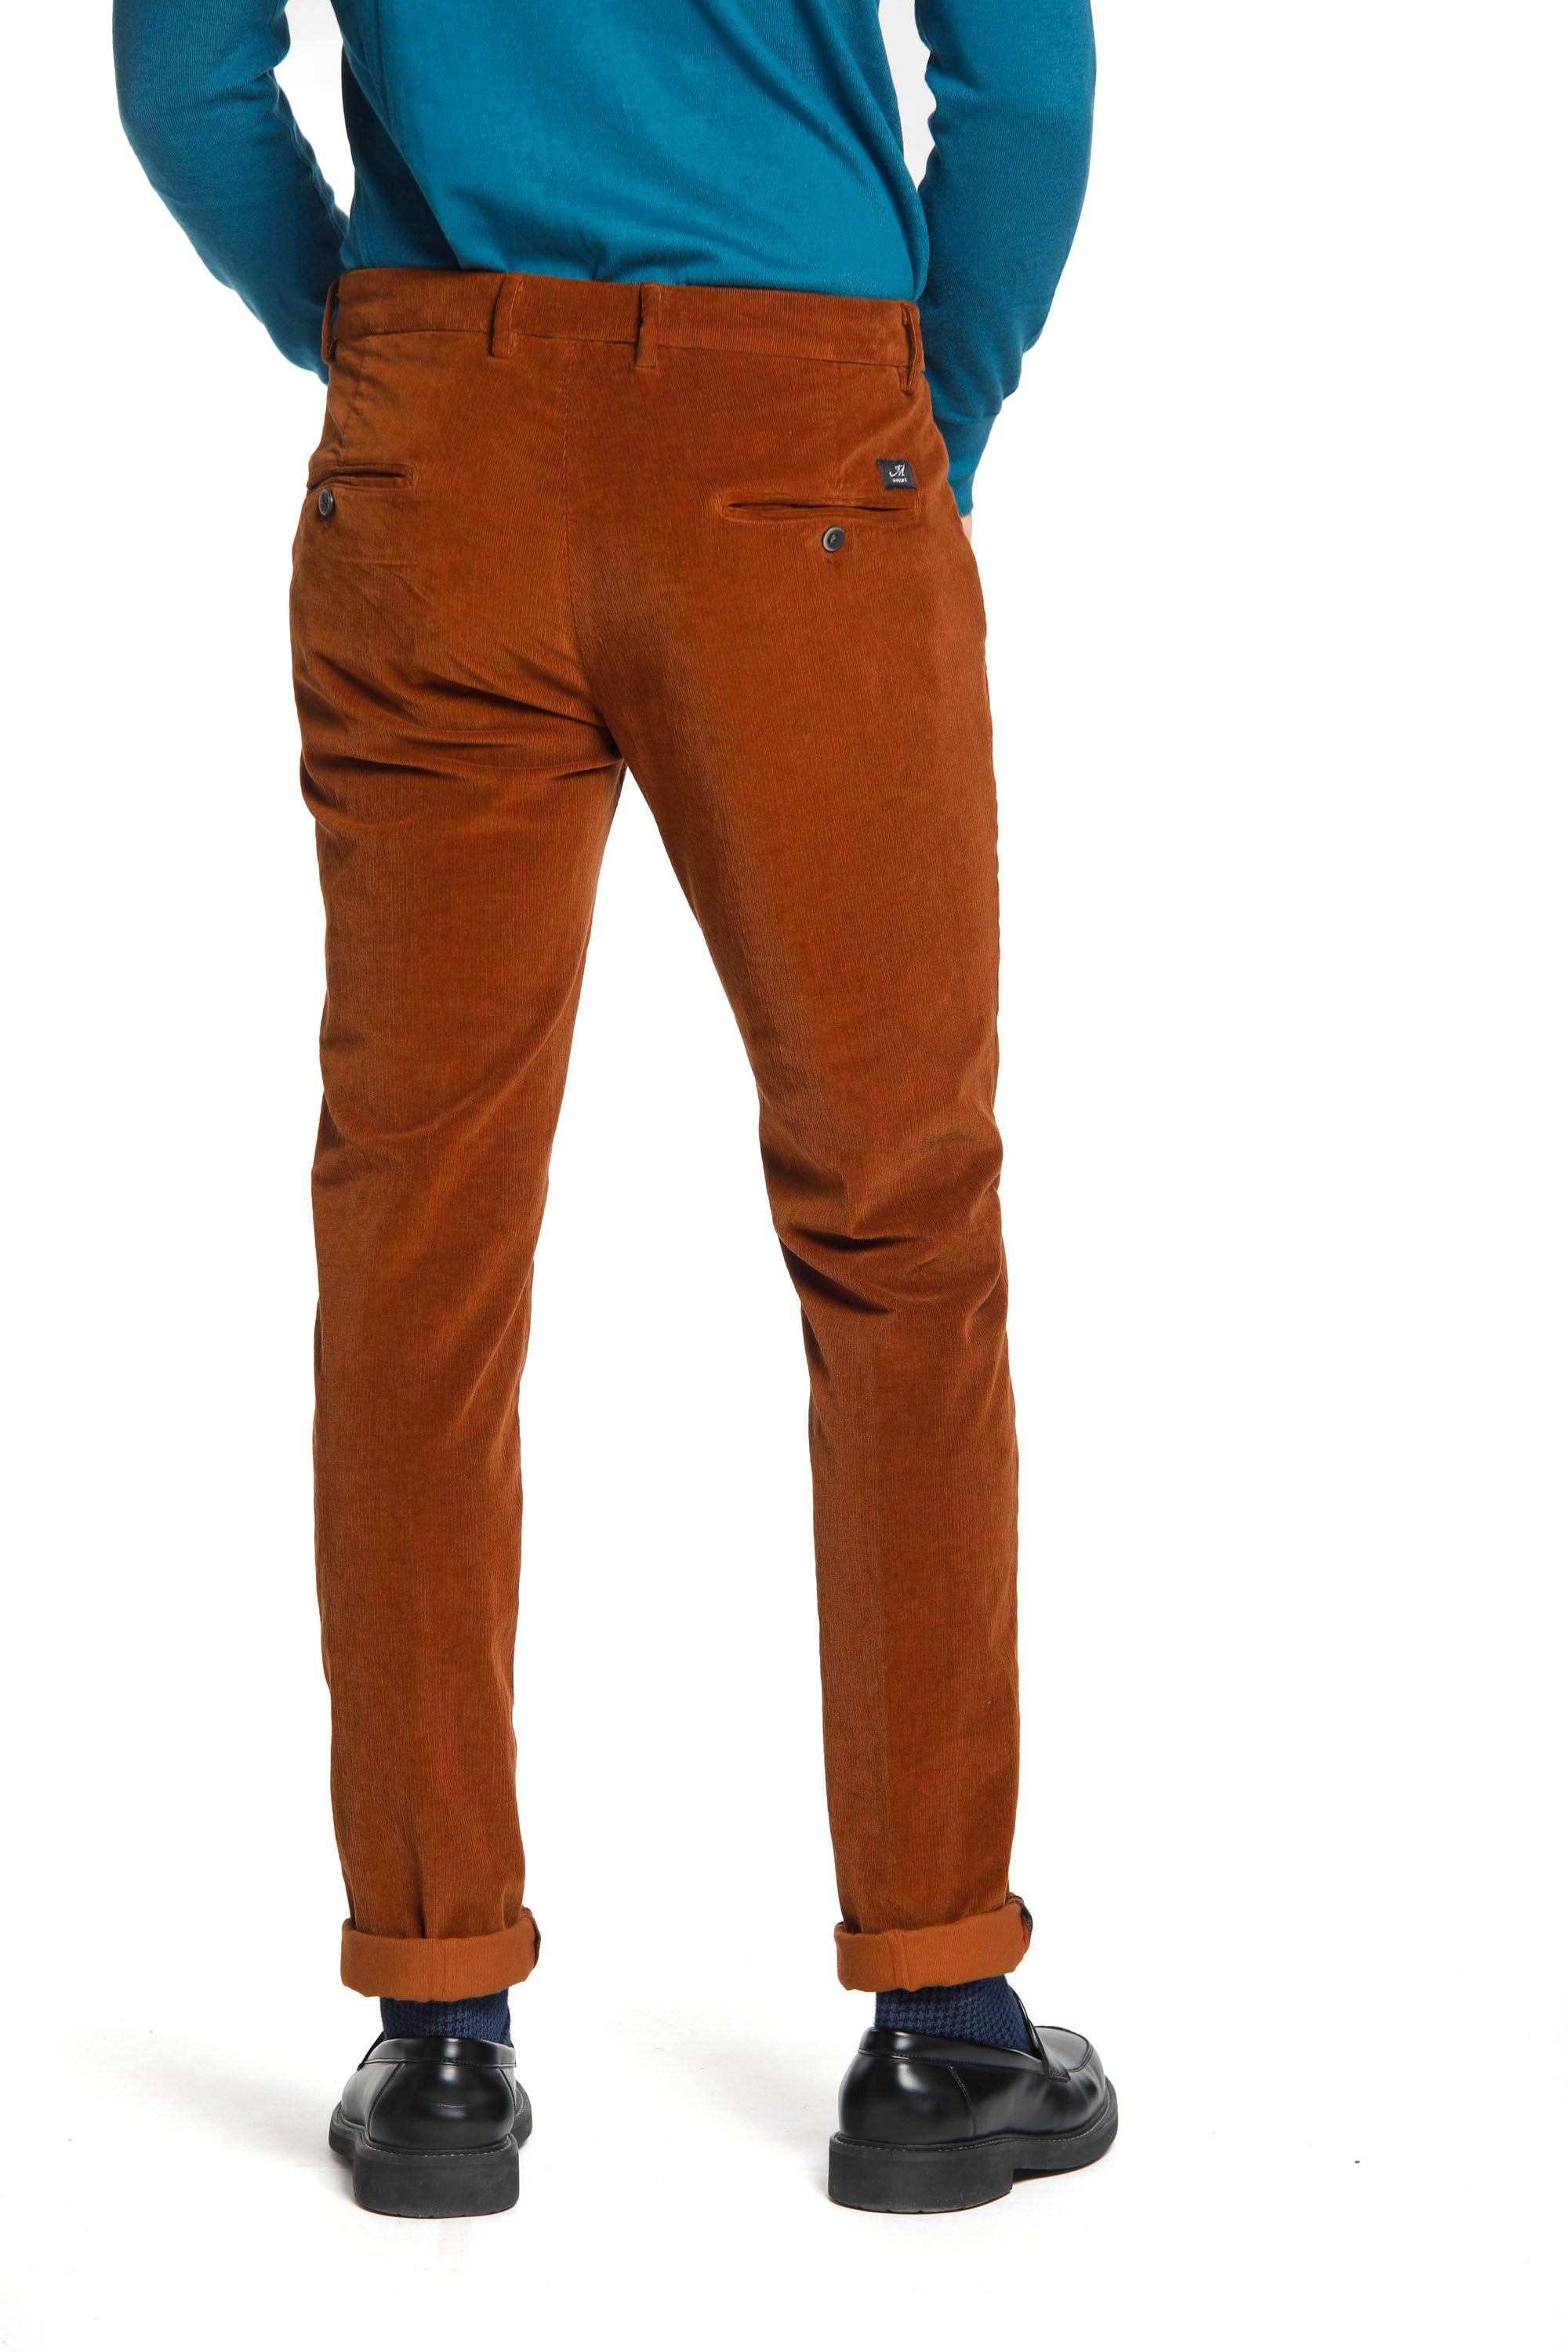 Torino Style pantalon chino homme en velours à rayures 1500 coupe slim